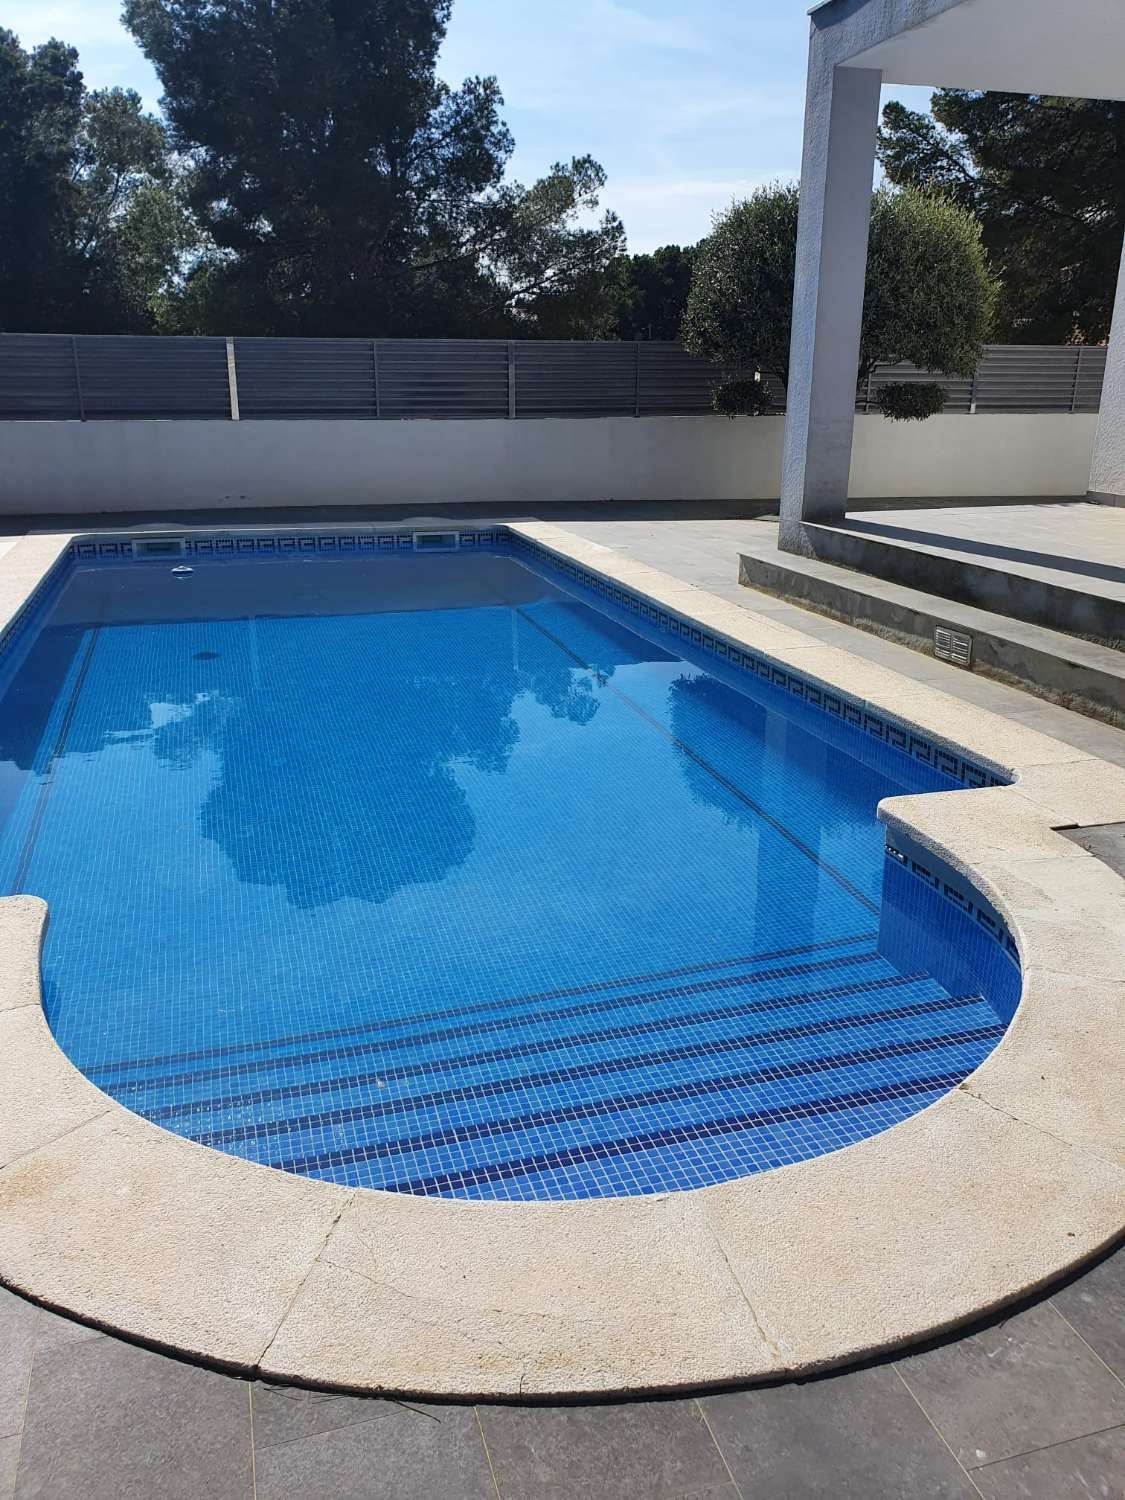 Preciosa casa moderna amb piscina privada